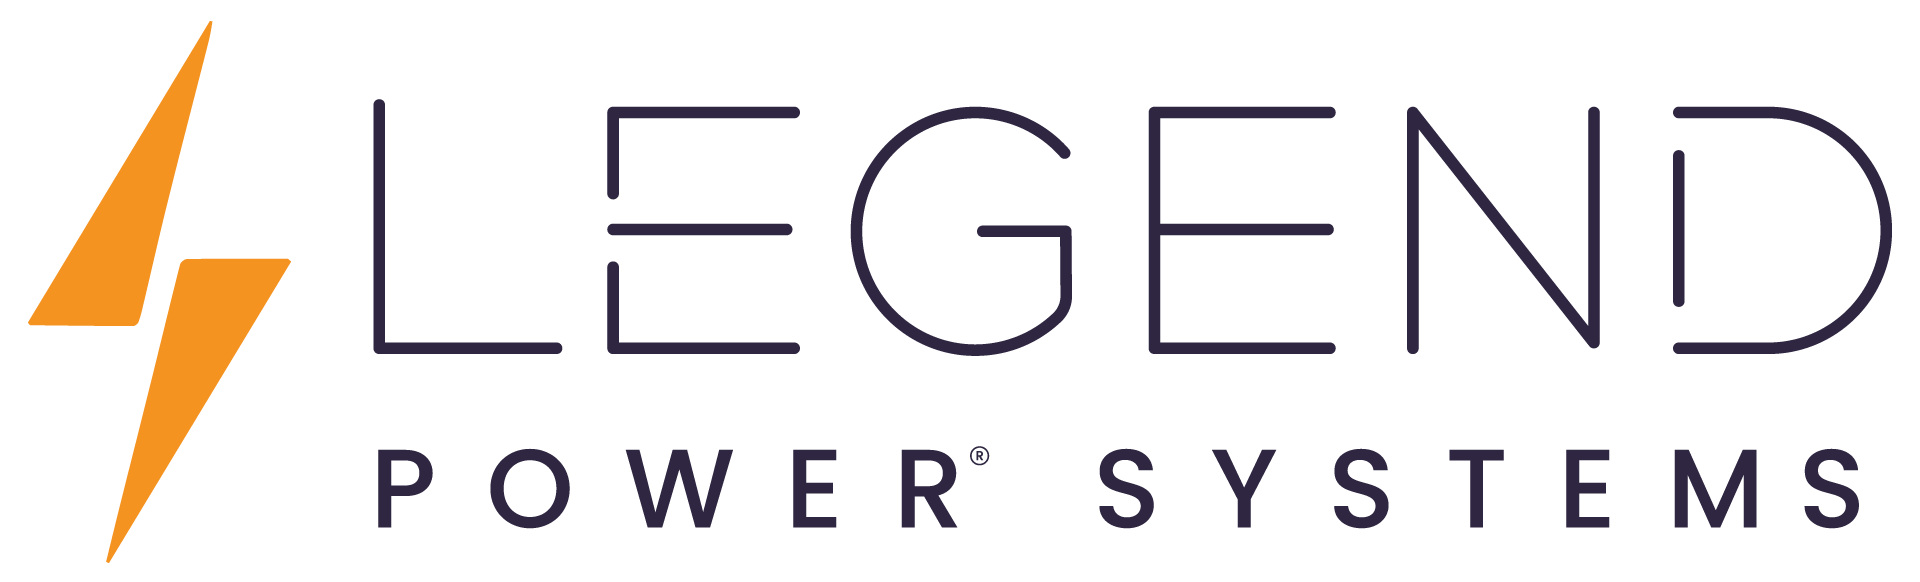 Legend Power Systems Inc.